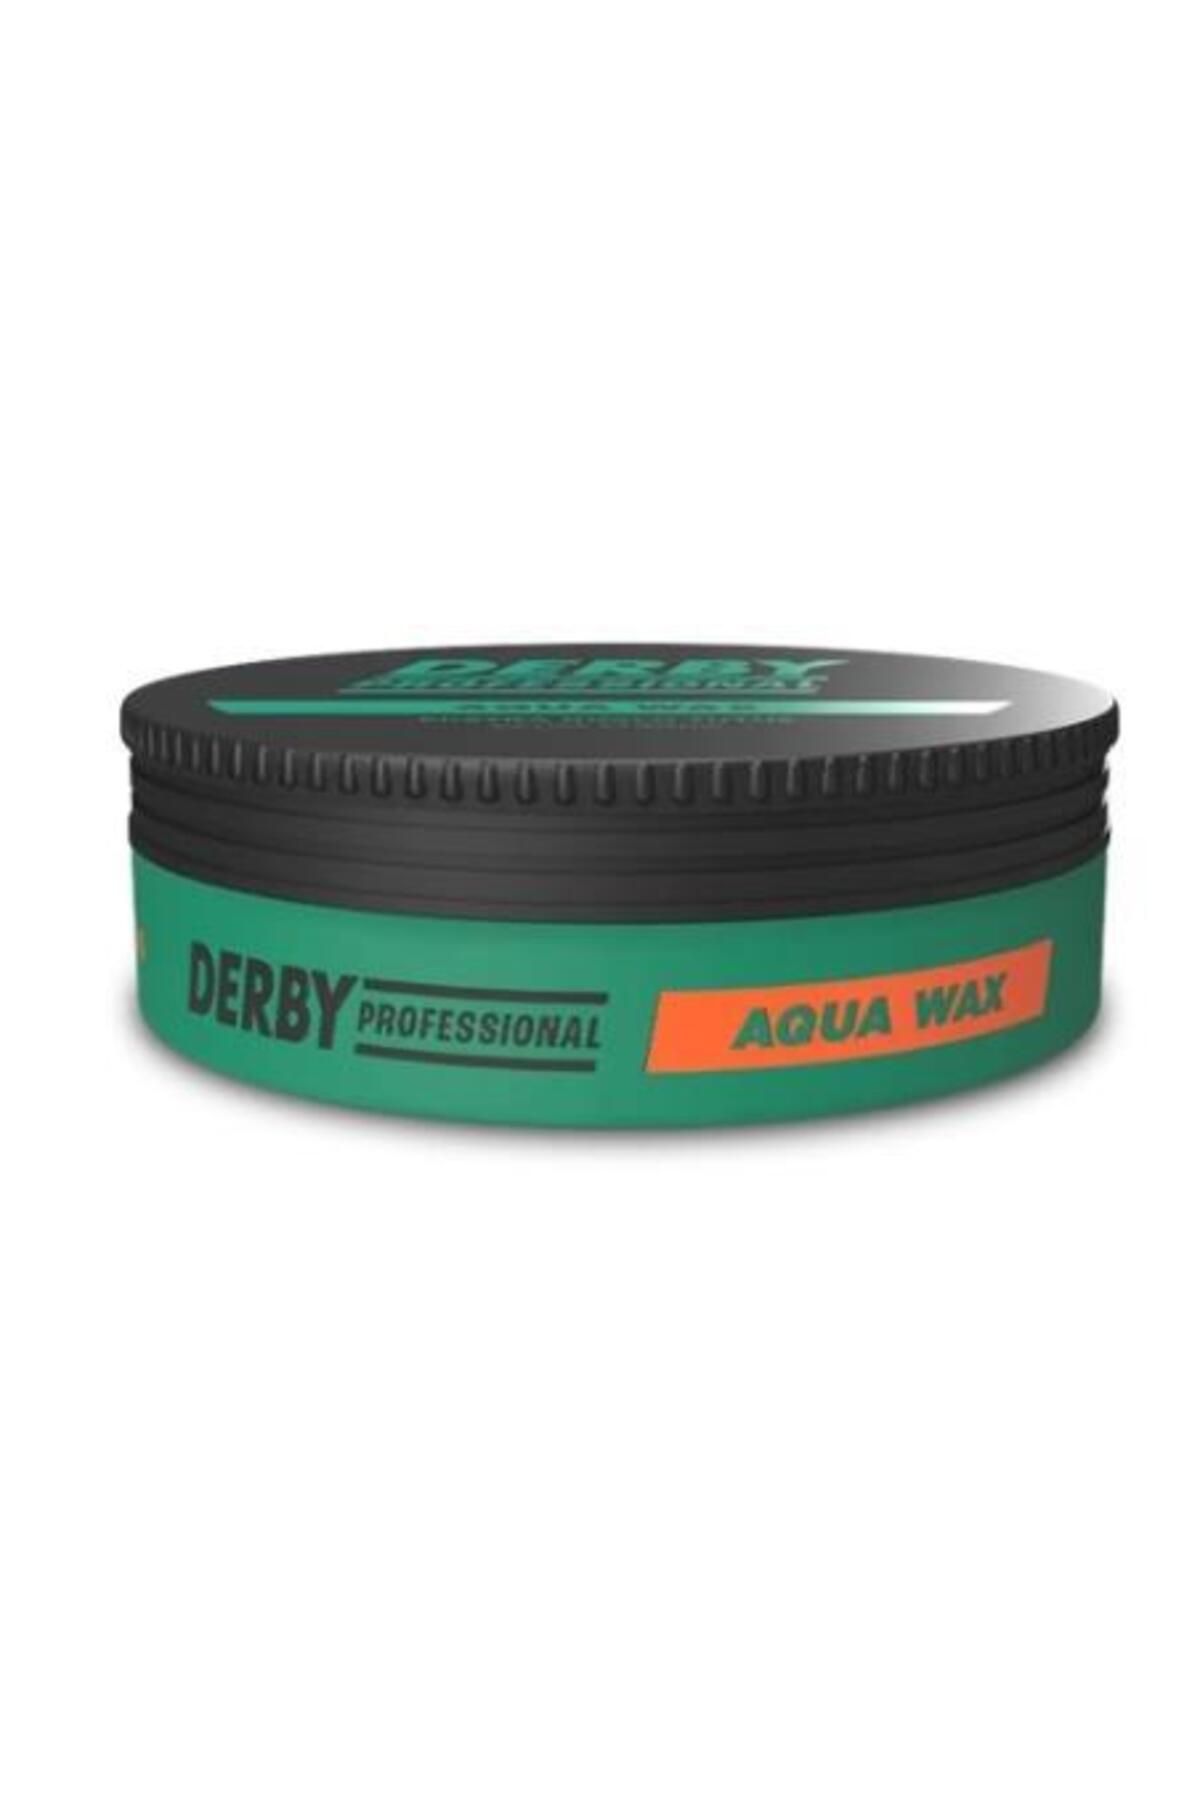 Derby Professional Aqua Wax Ekstra Güçlü Tutuş 150ml